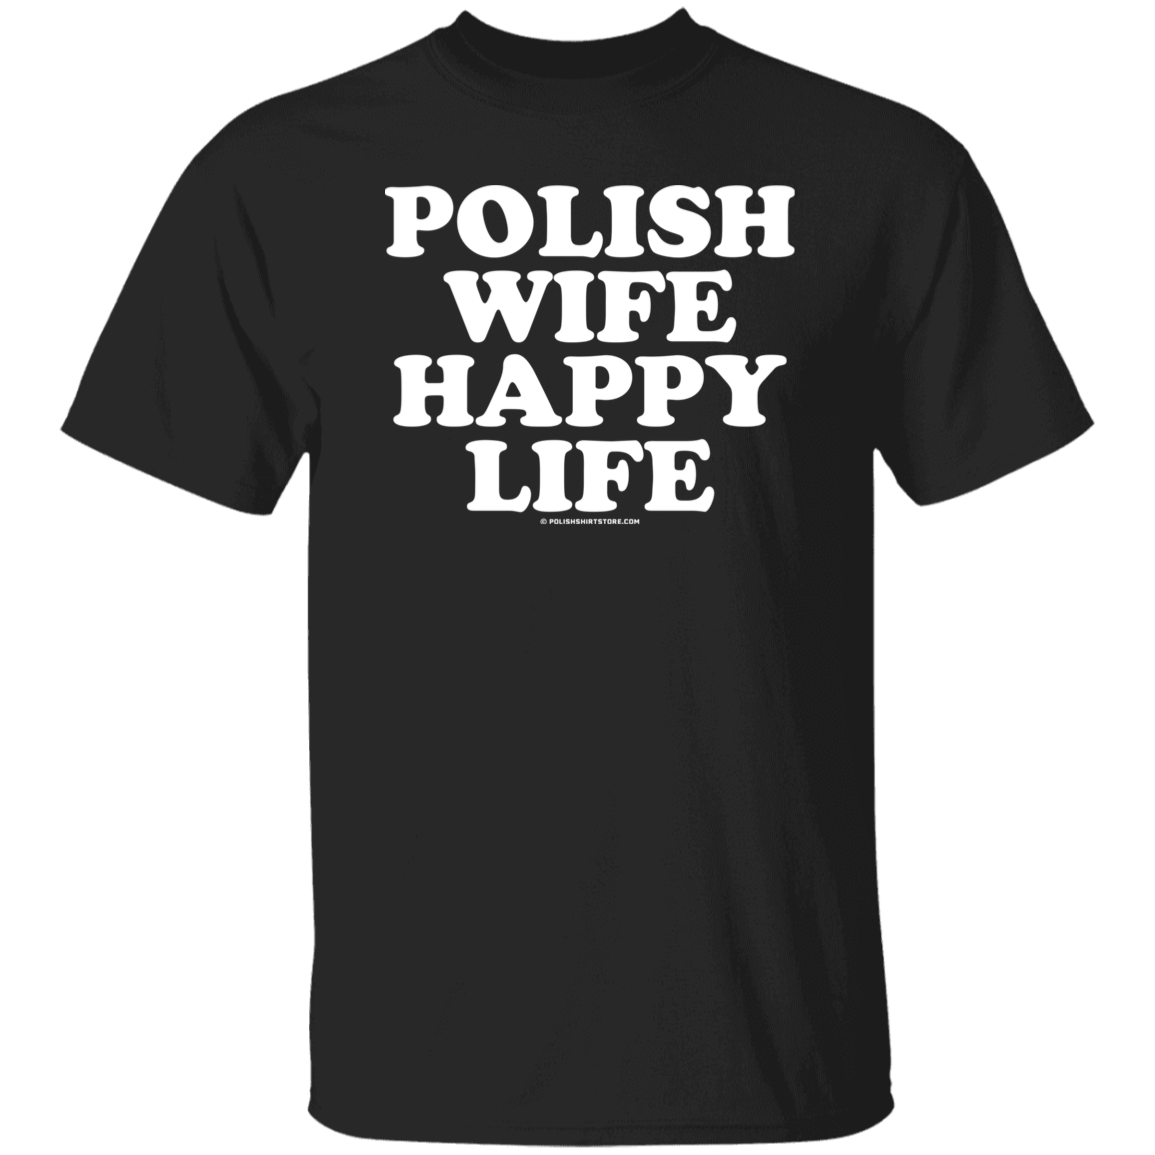 Polish Wife Happy Life Apparel CustomCat G500 5.3 oz. T-Shirt Black S